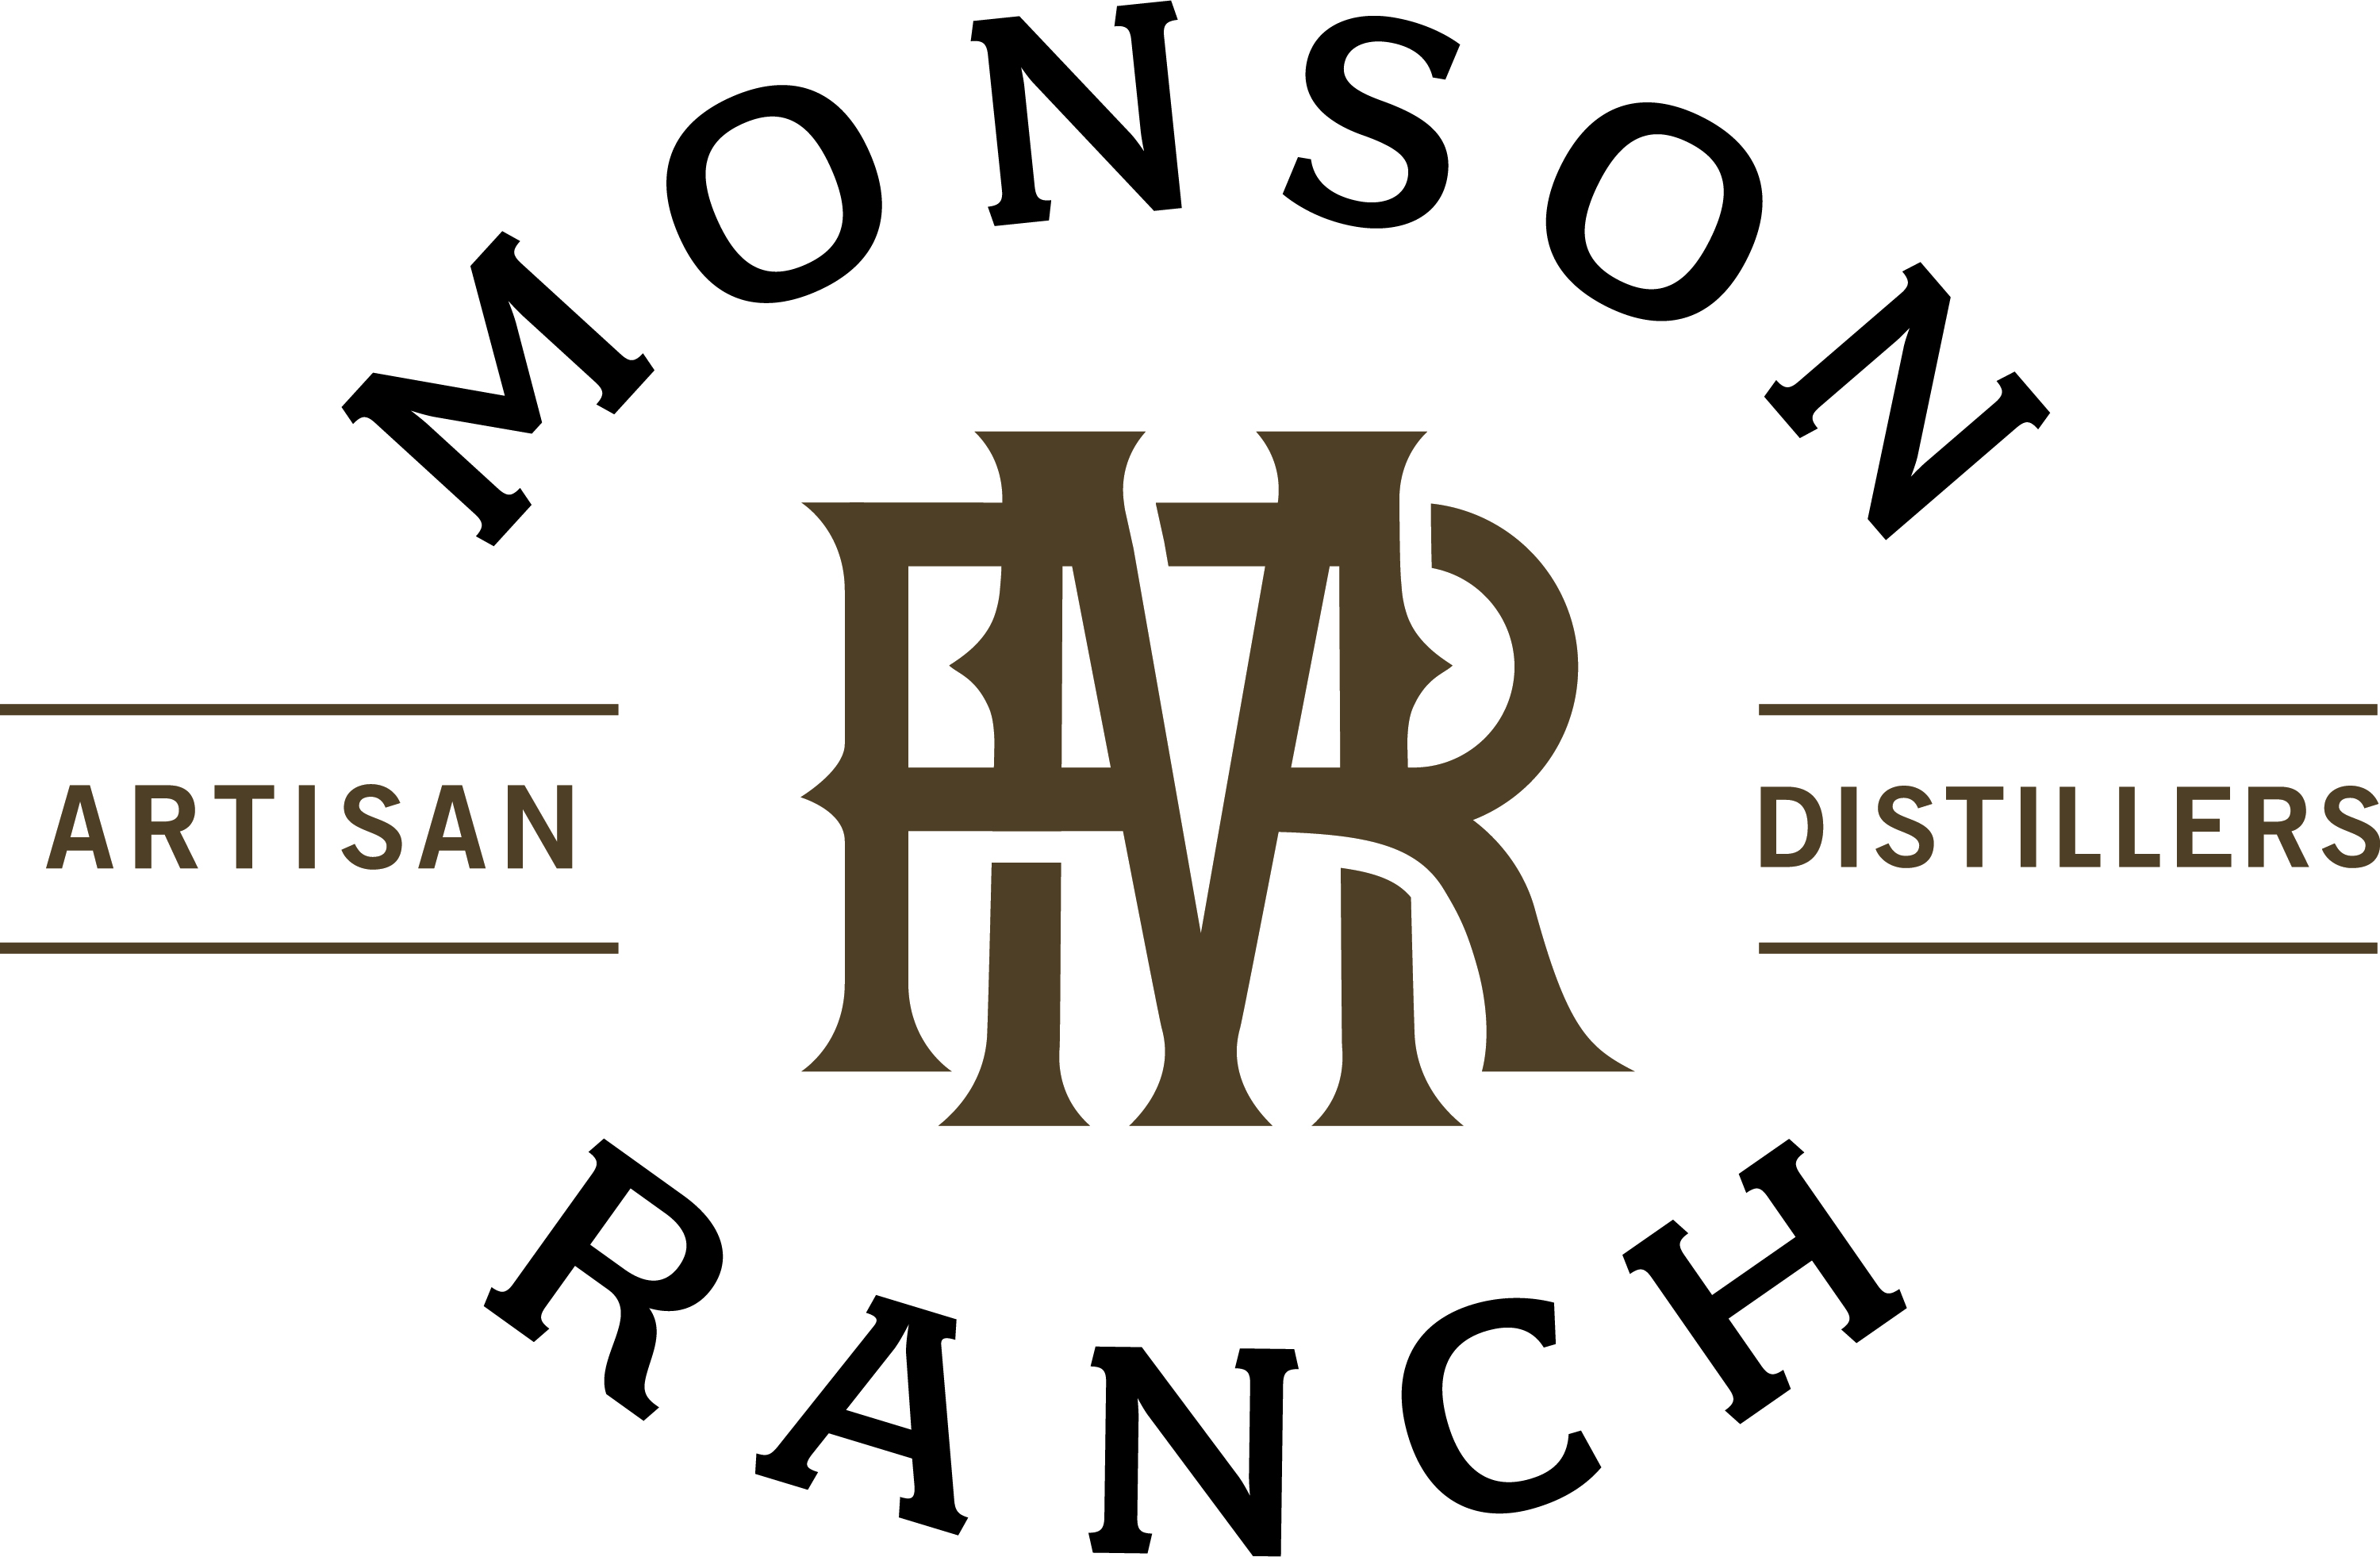 Monson Ranch Distillers